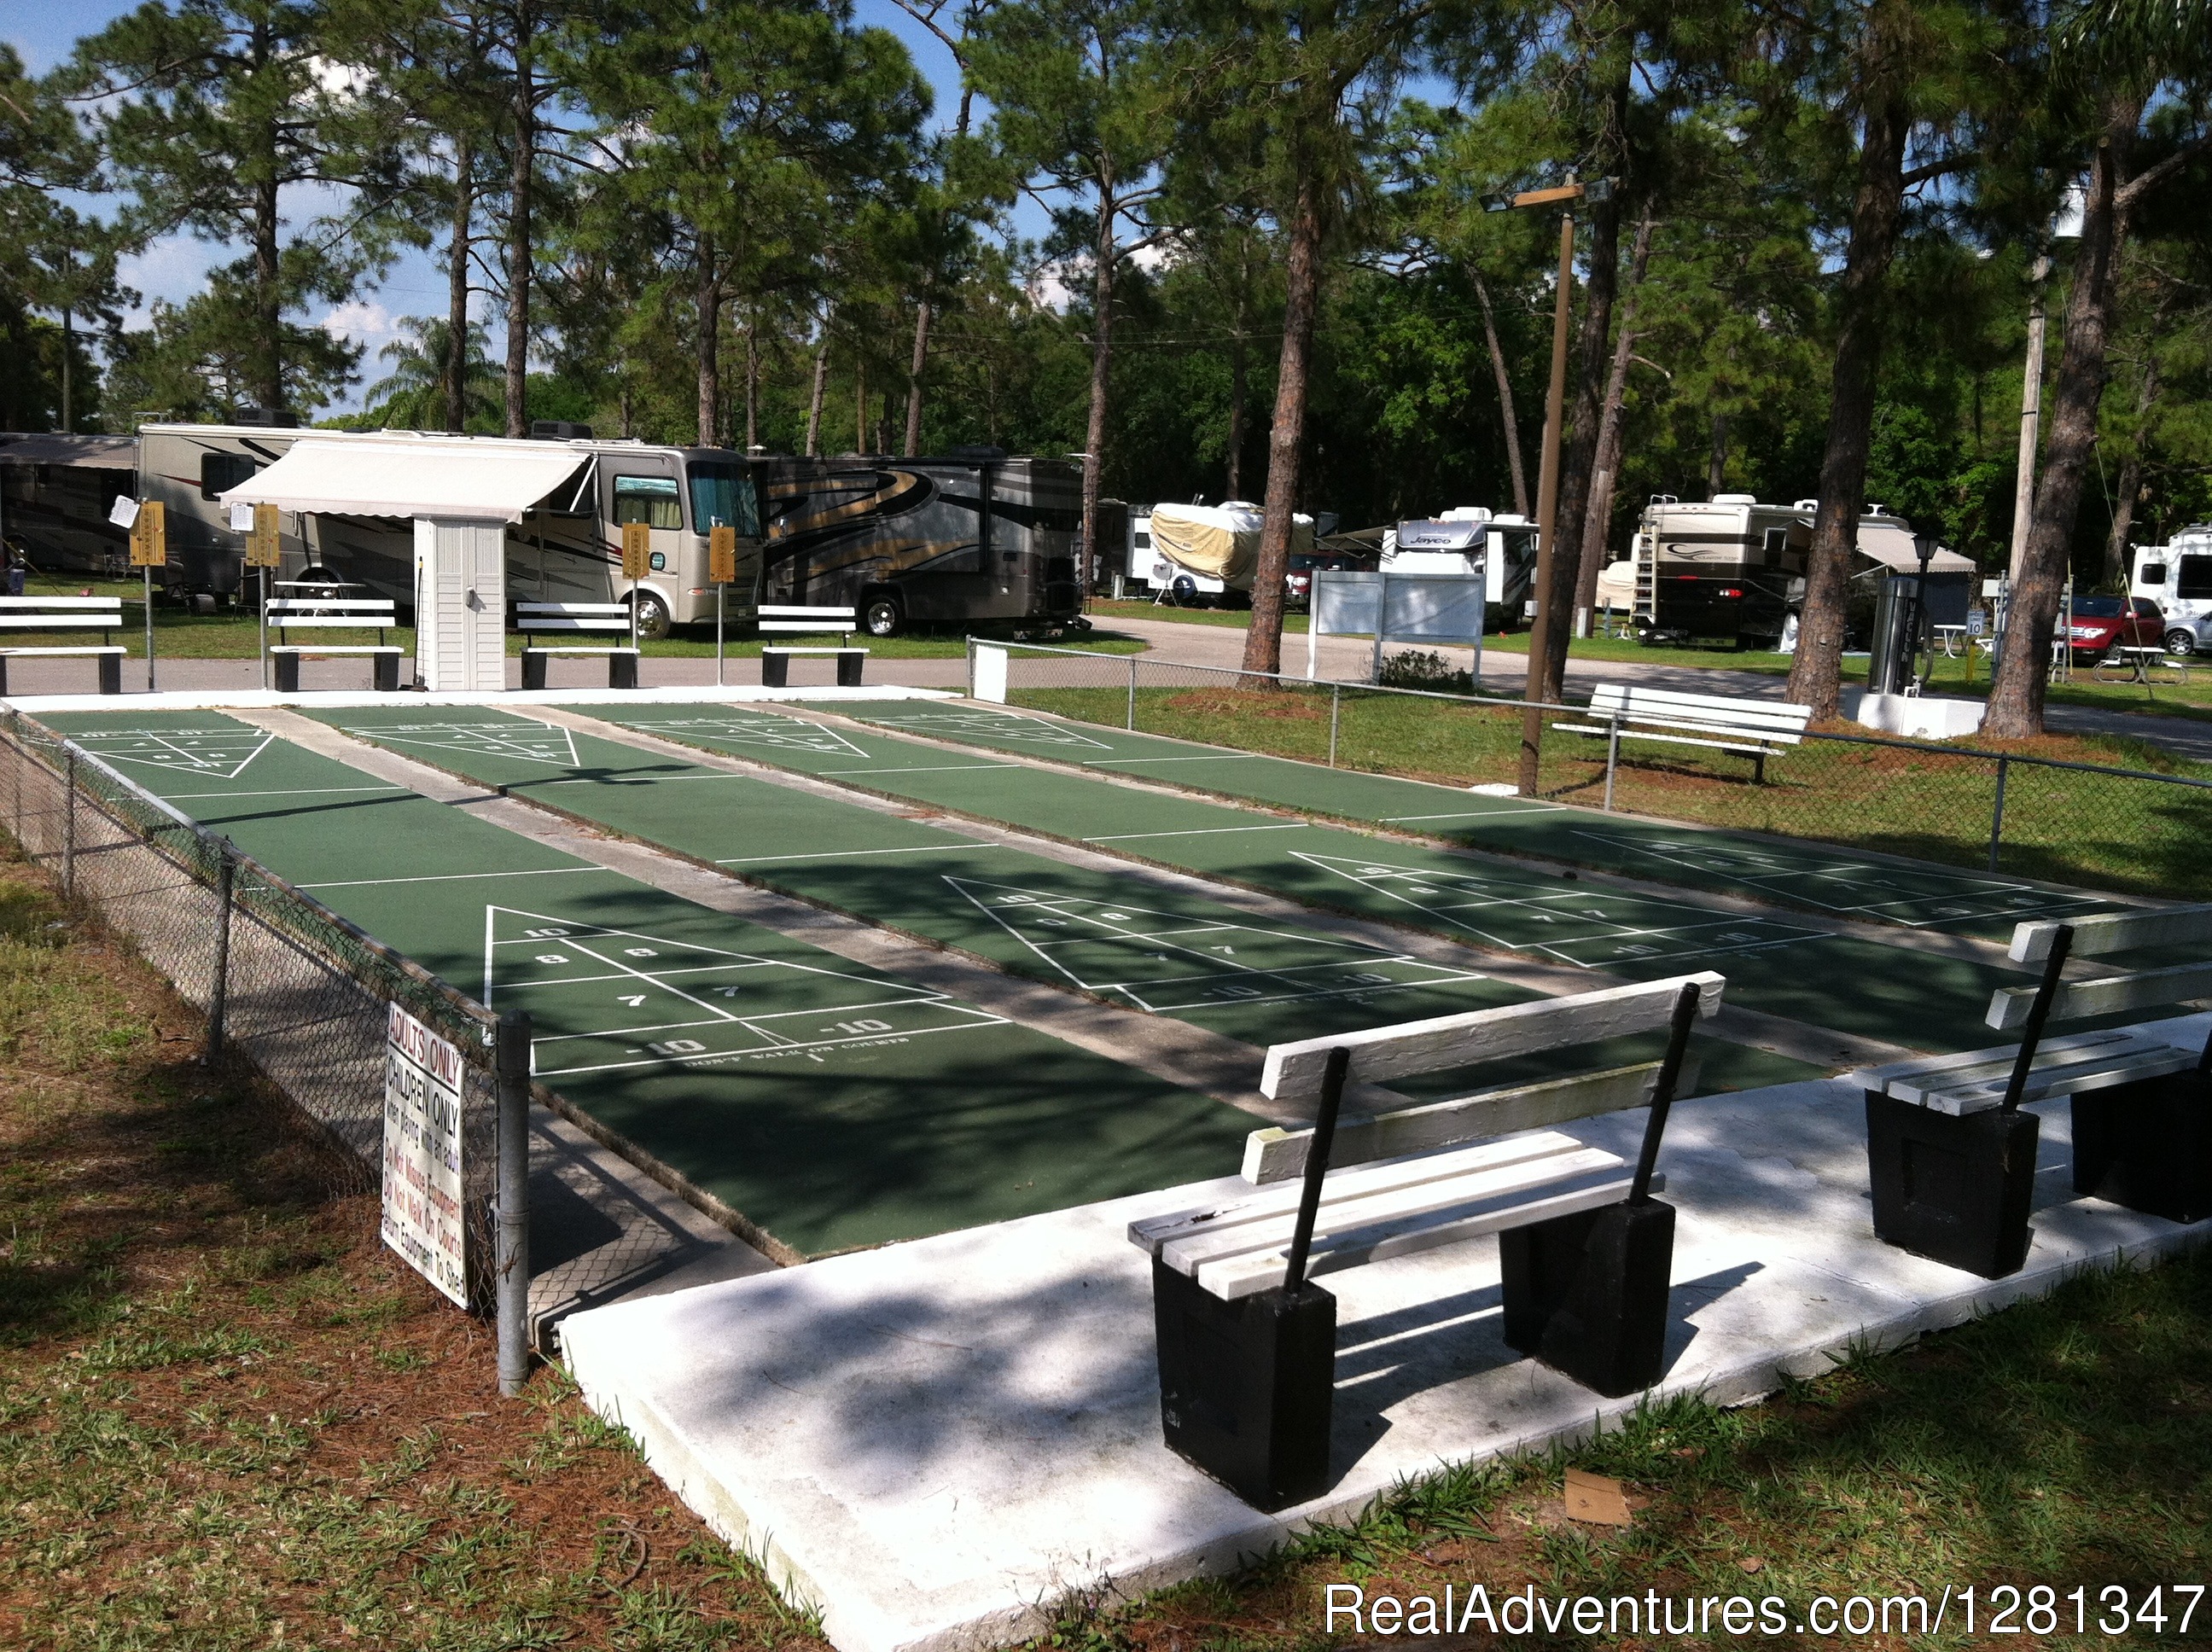 Orlando's Winter Garden RV Resort, Winter Garden, Florida Campgrounds & RV Parks RealAdventures